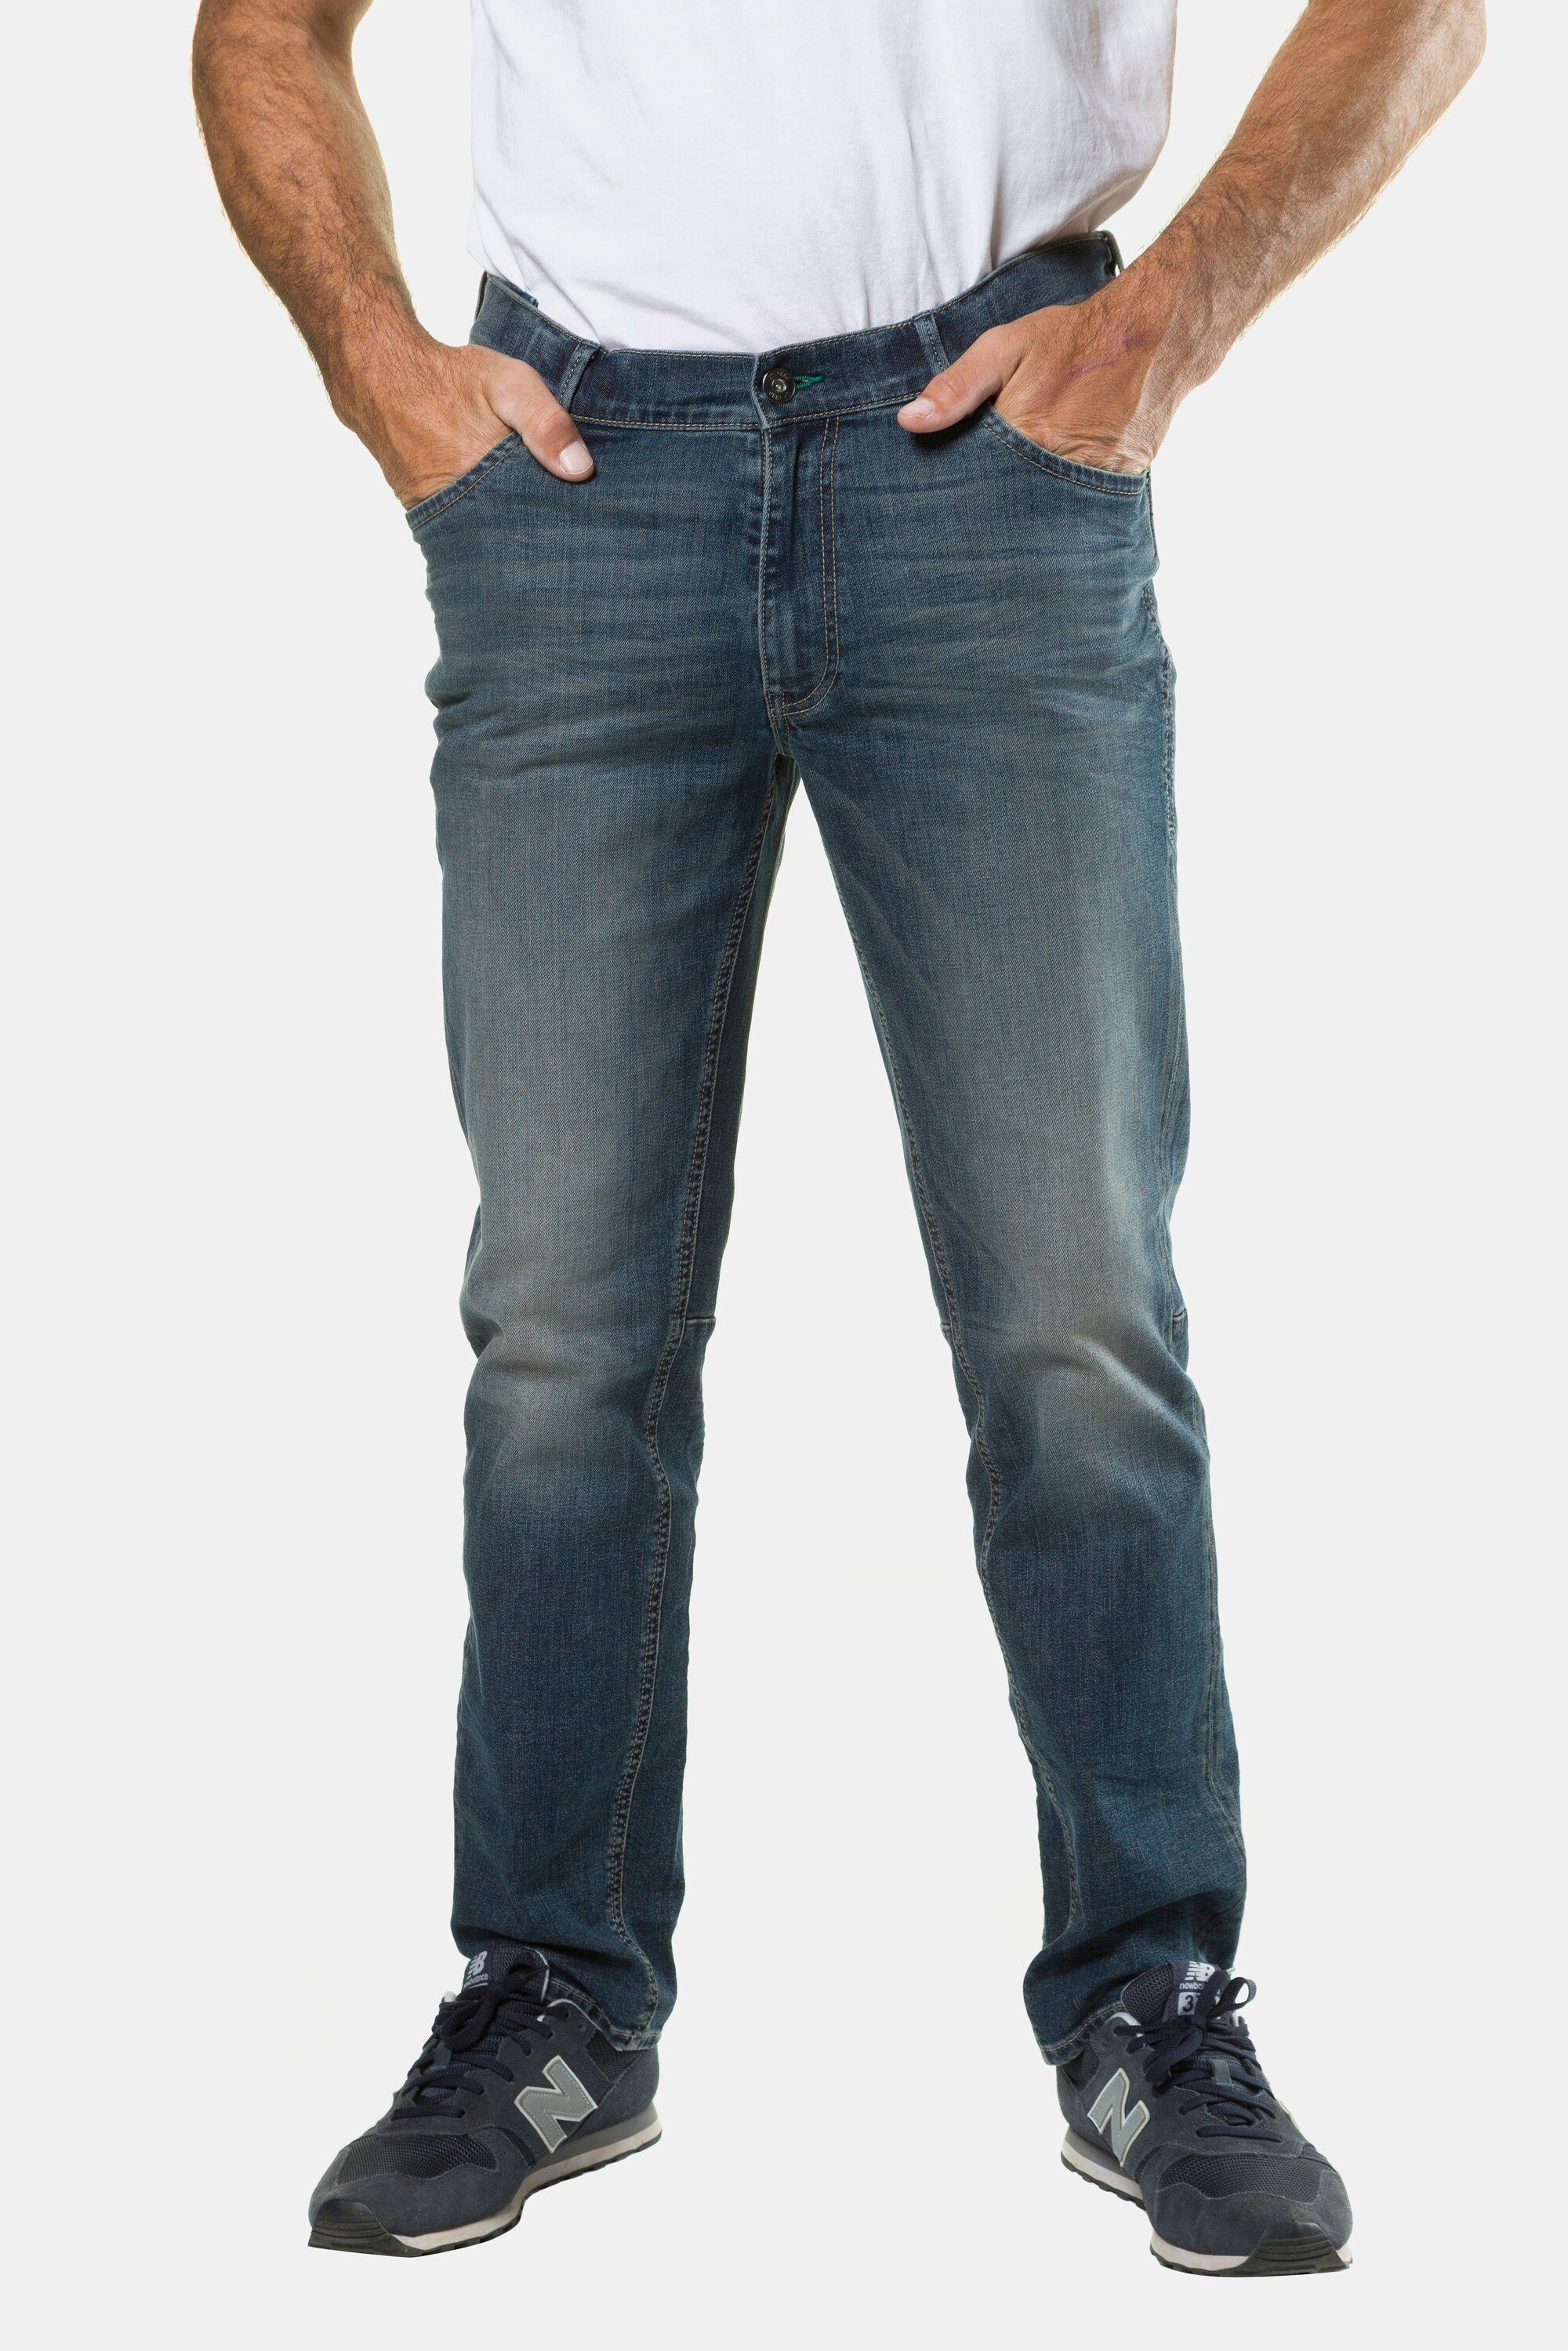 Cargohose Jeans stone JP1880 Fit Traveller-Bund Denim blue Straight